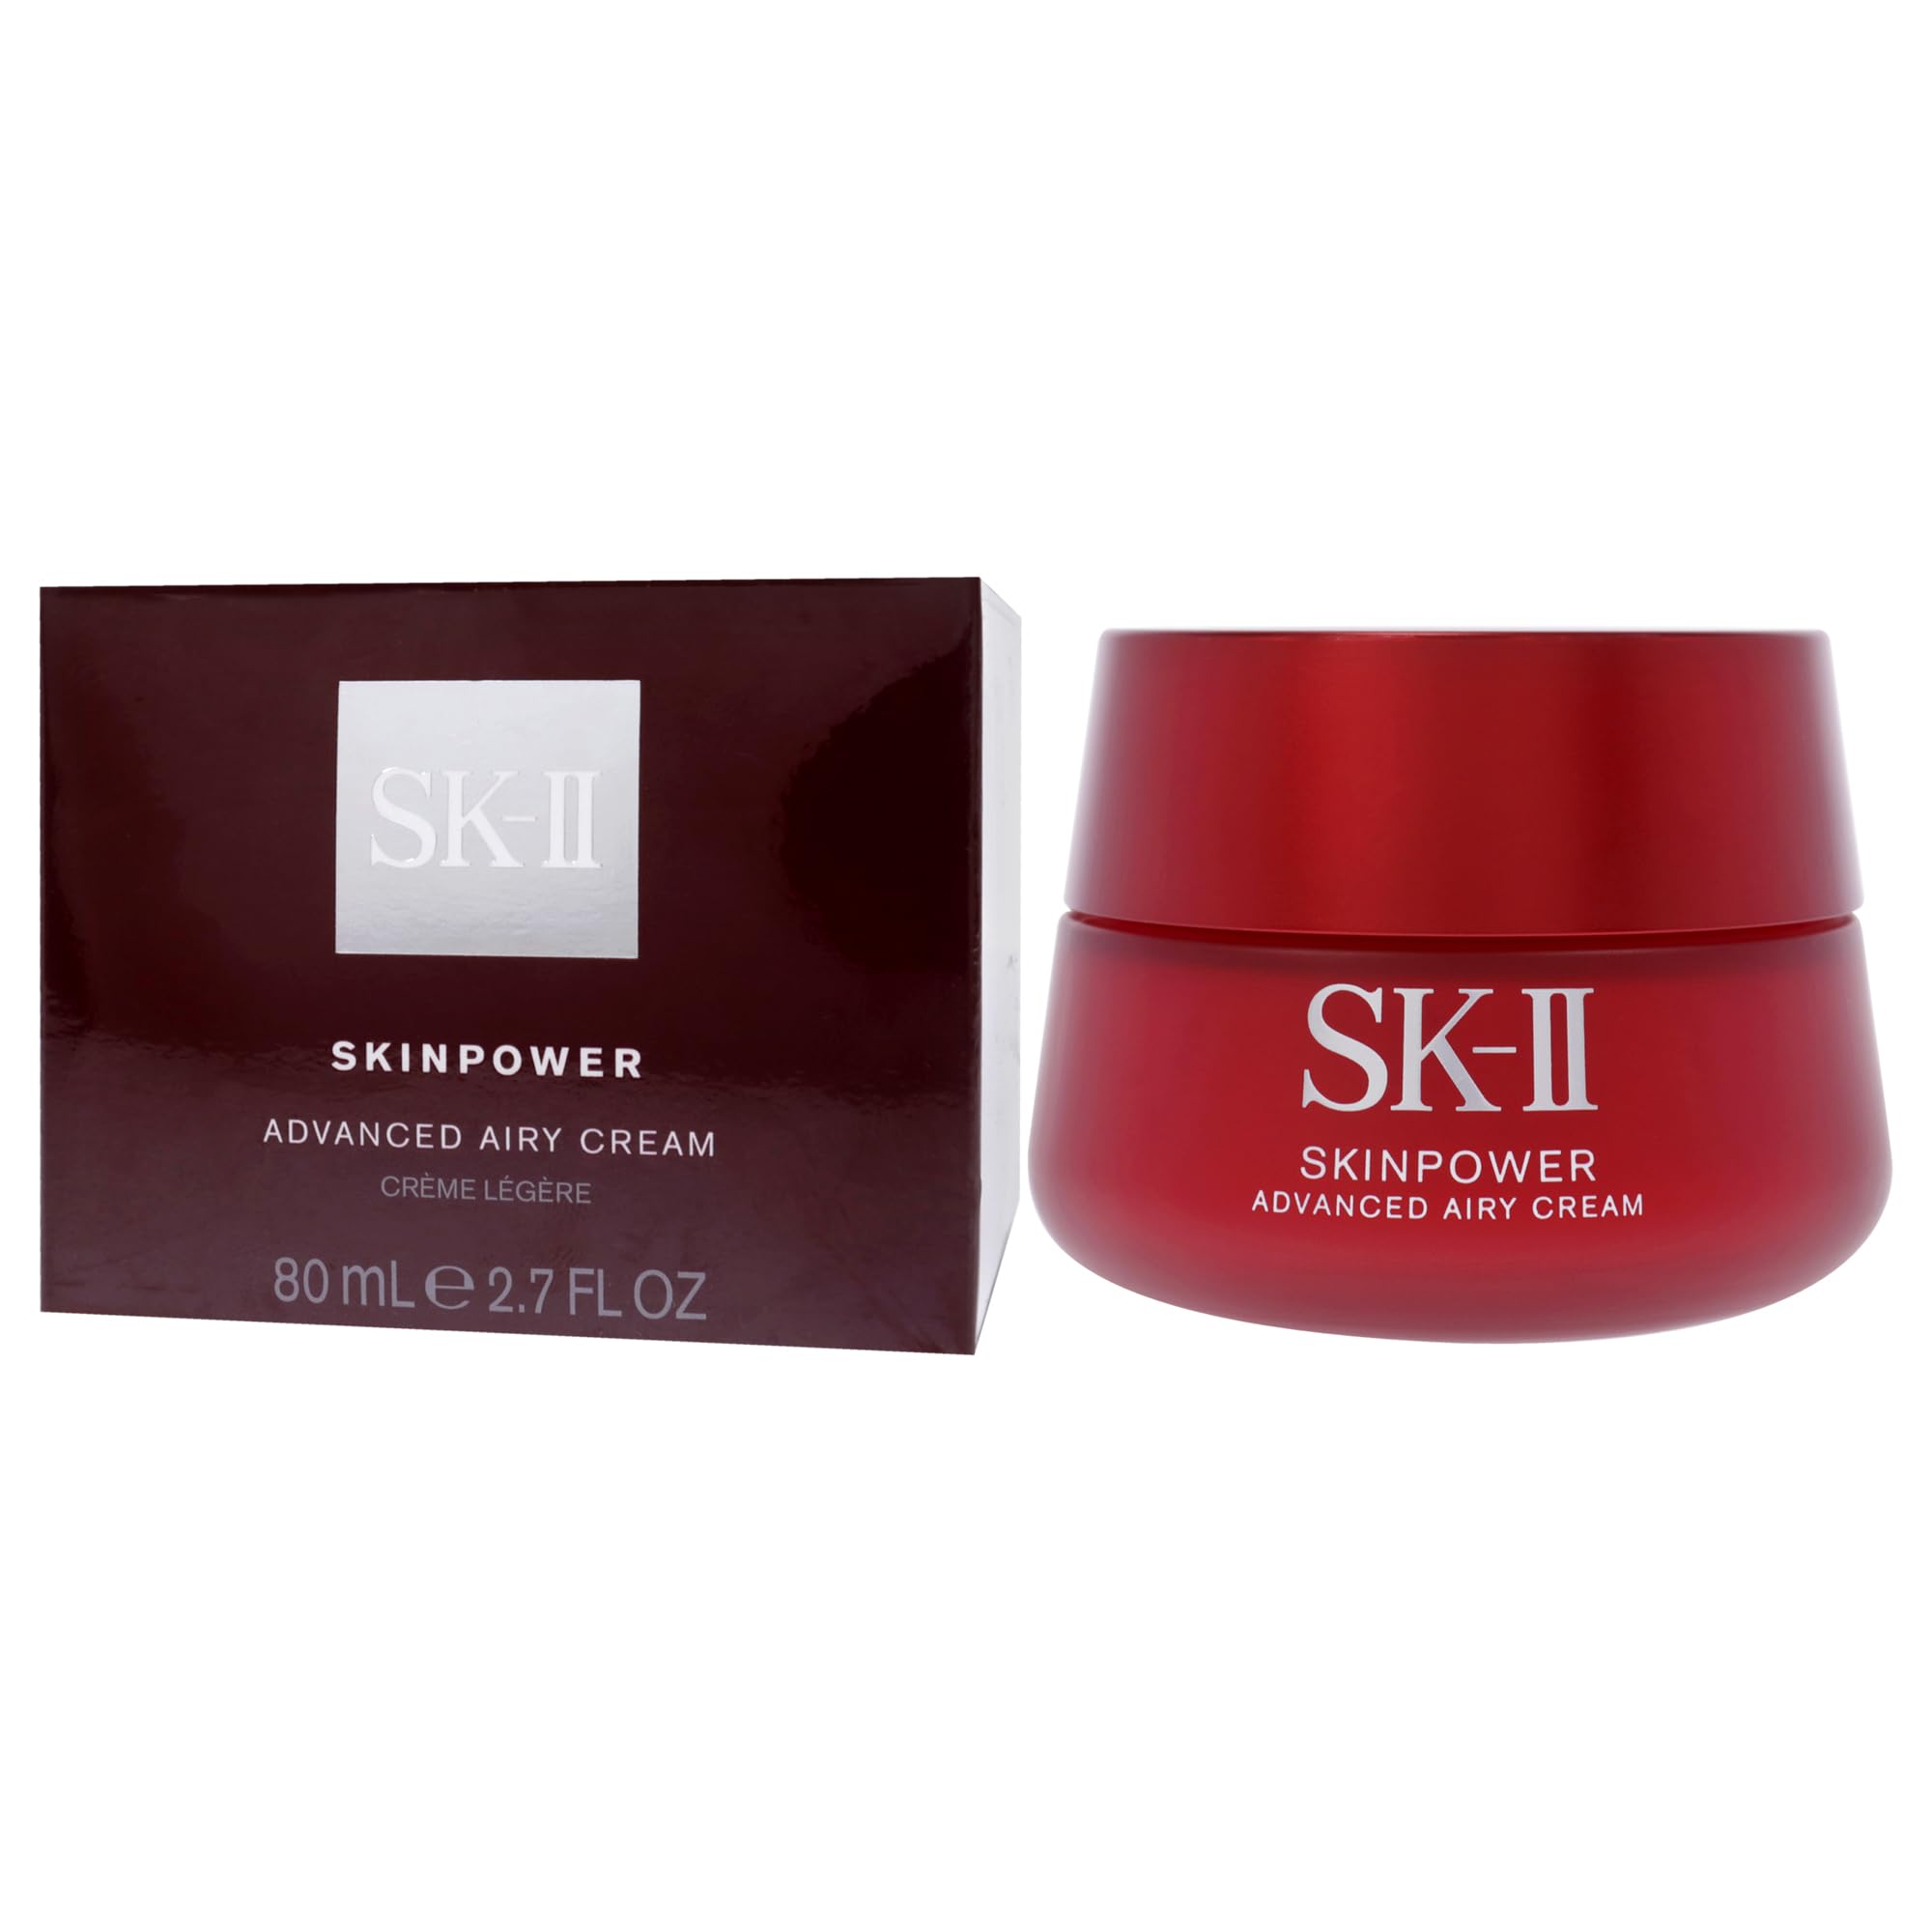 SK-II Skinpower Advanced Airy Cream, 2.7 Ounce